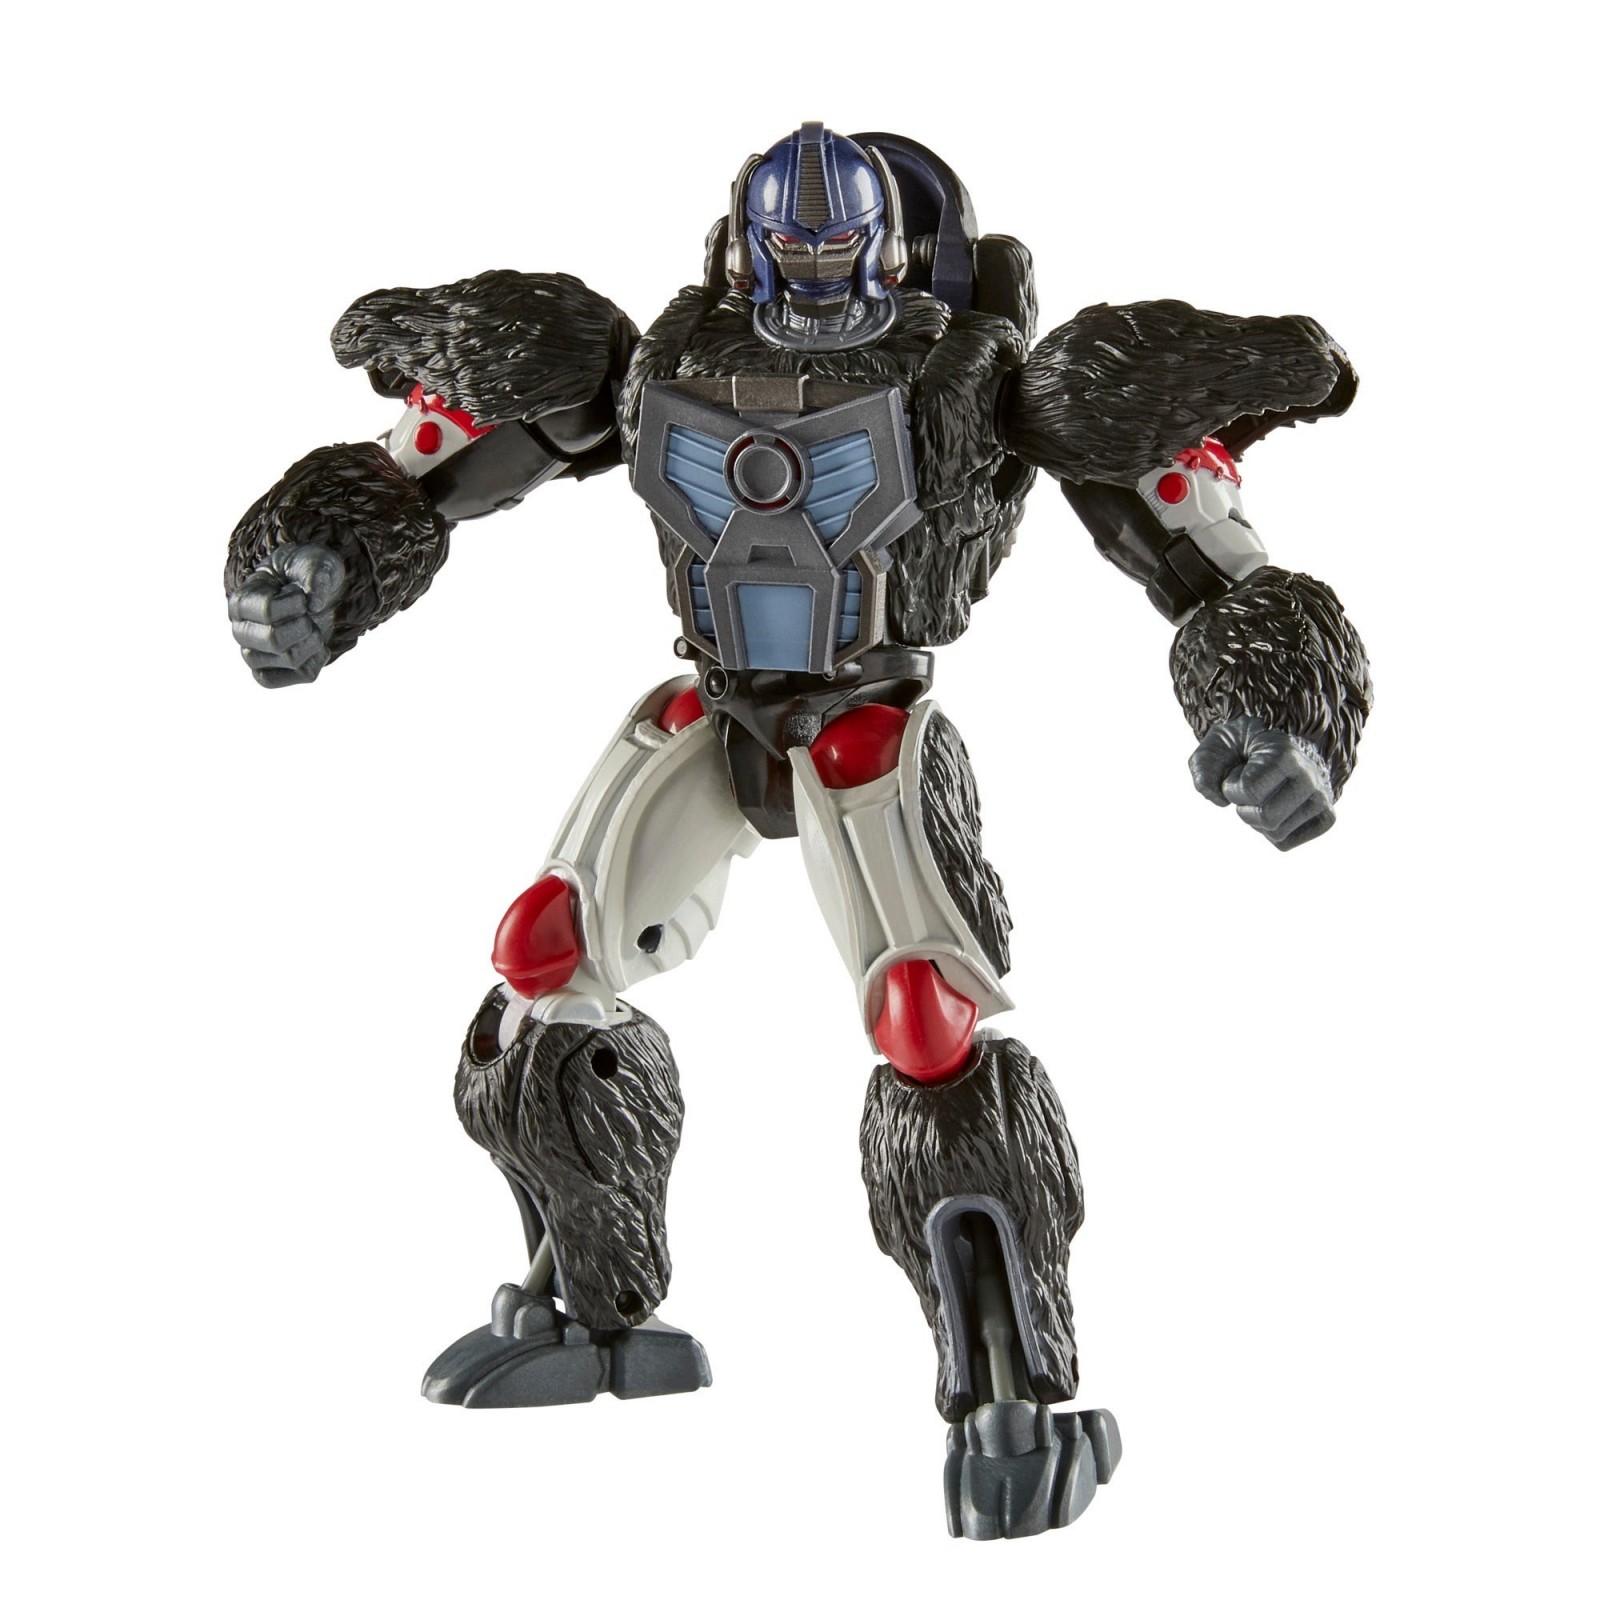 Transformers News: Transformer RED Series Optimus Primal and Reformatting Megatron Revealed